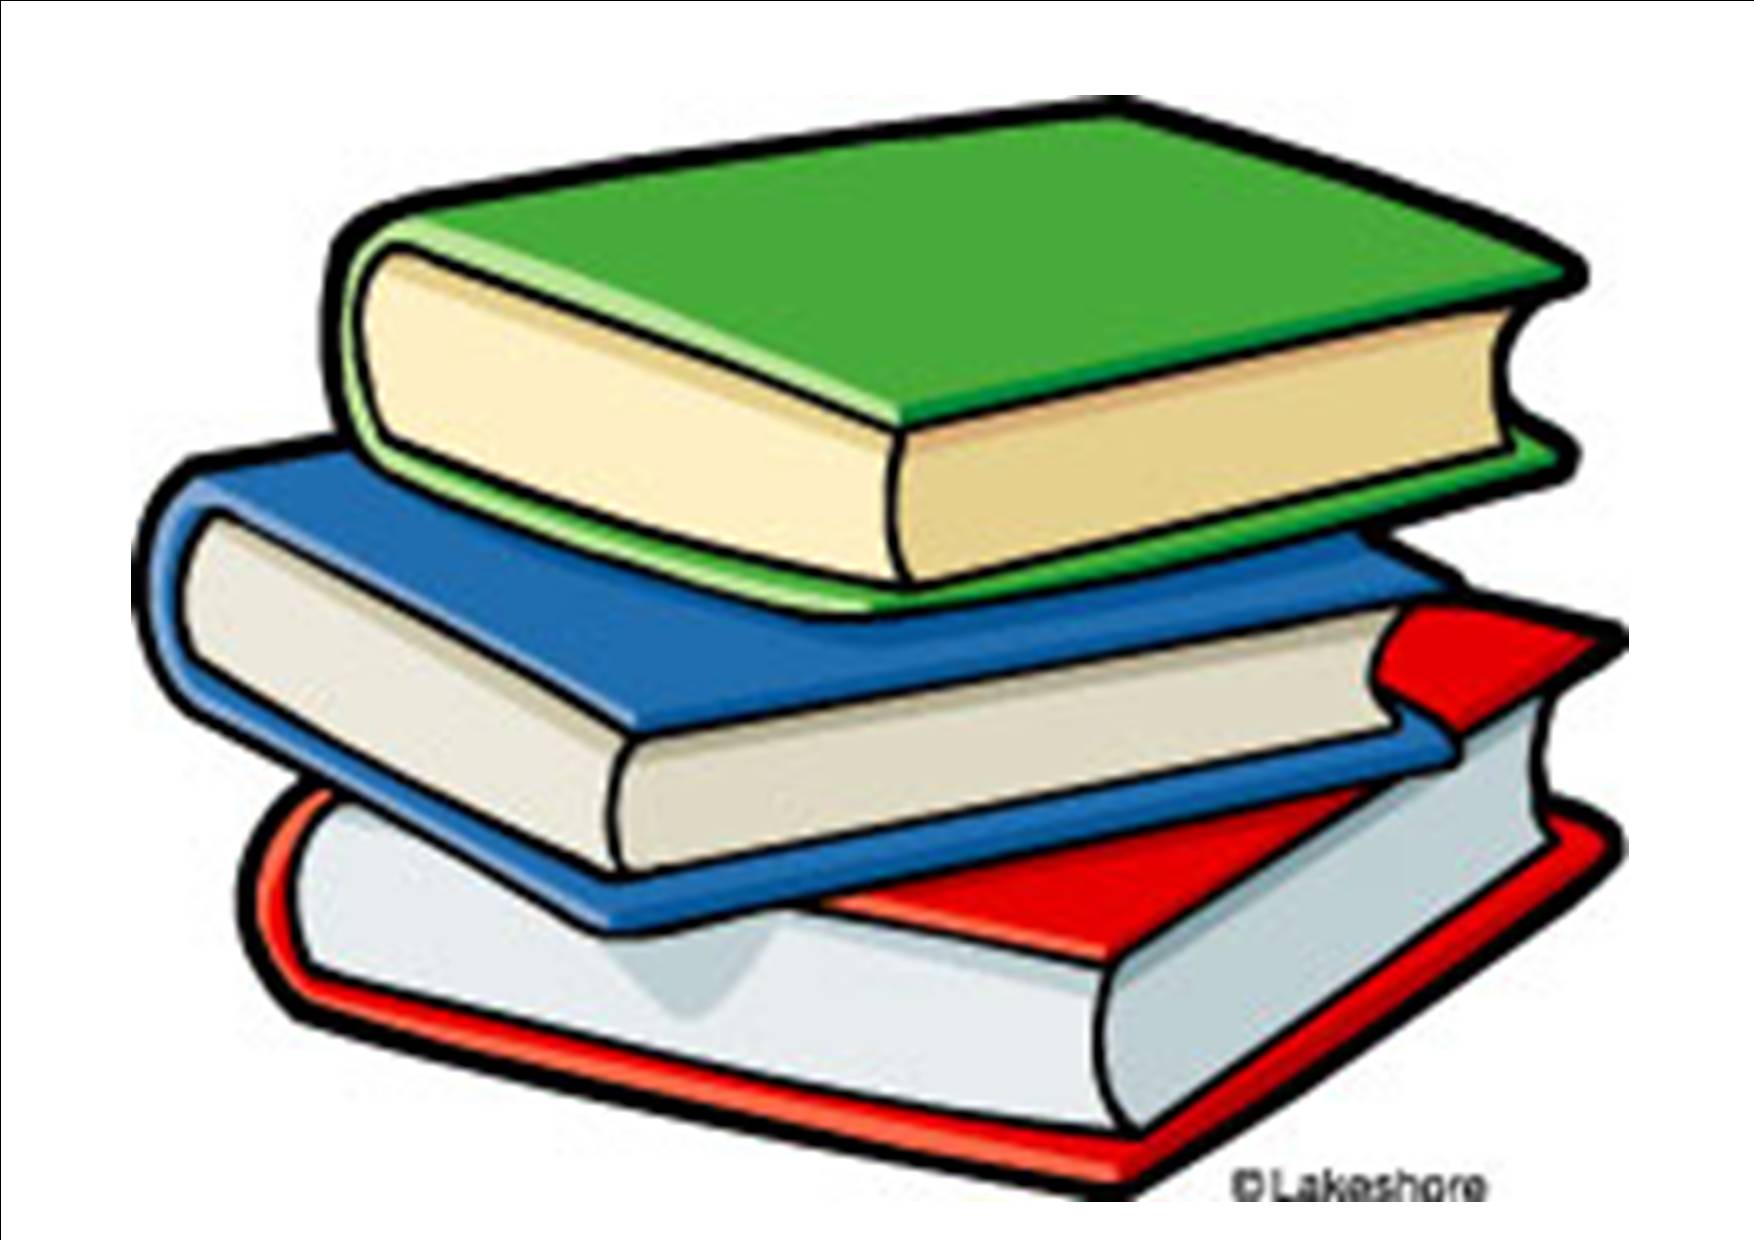 Books book education clipart 